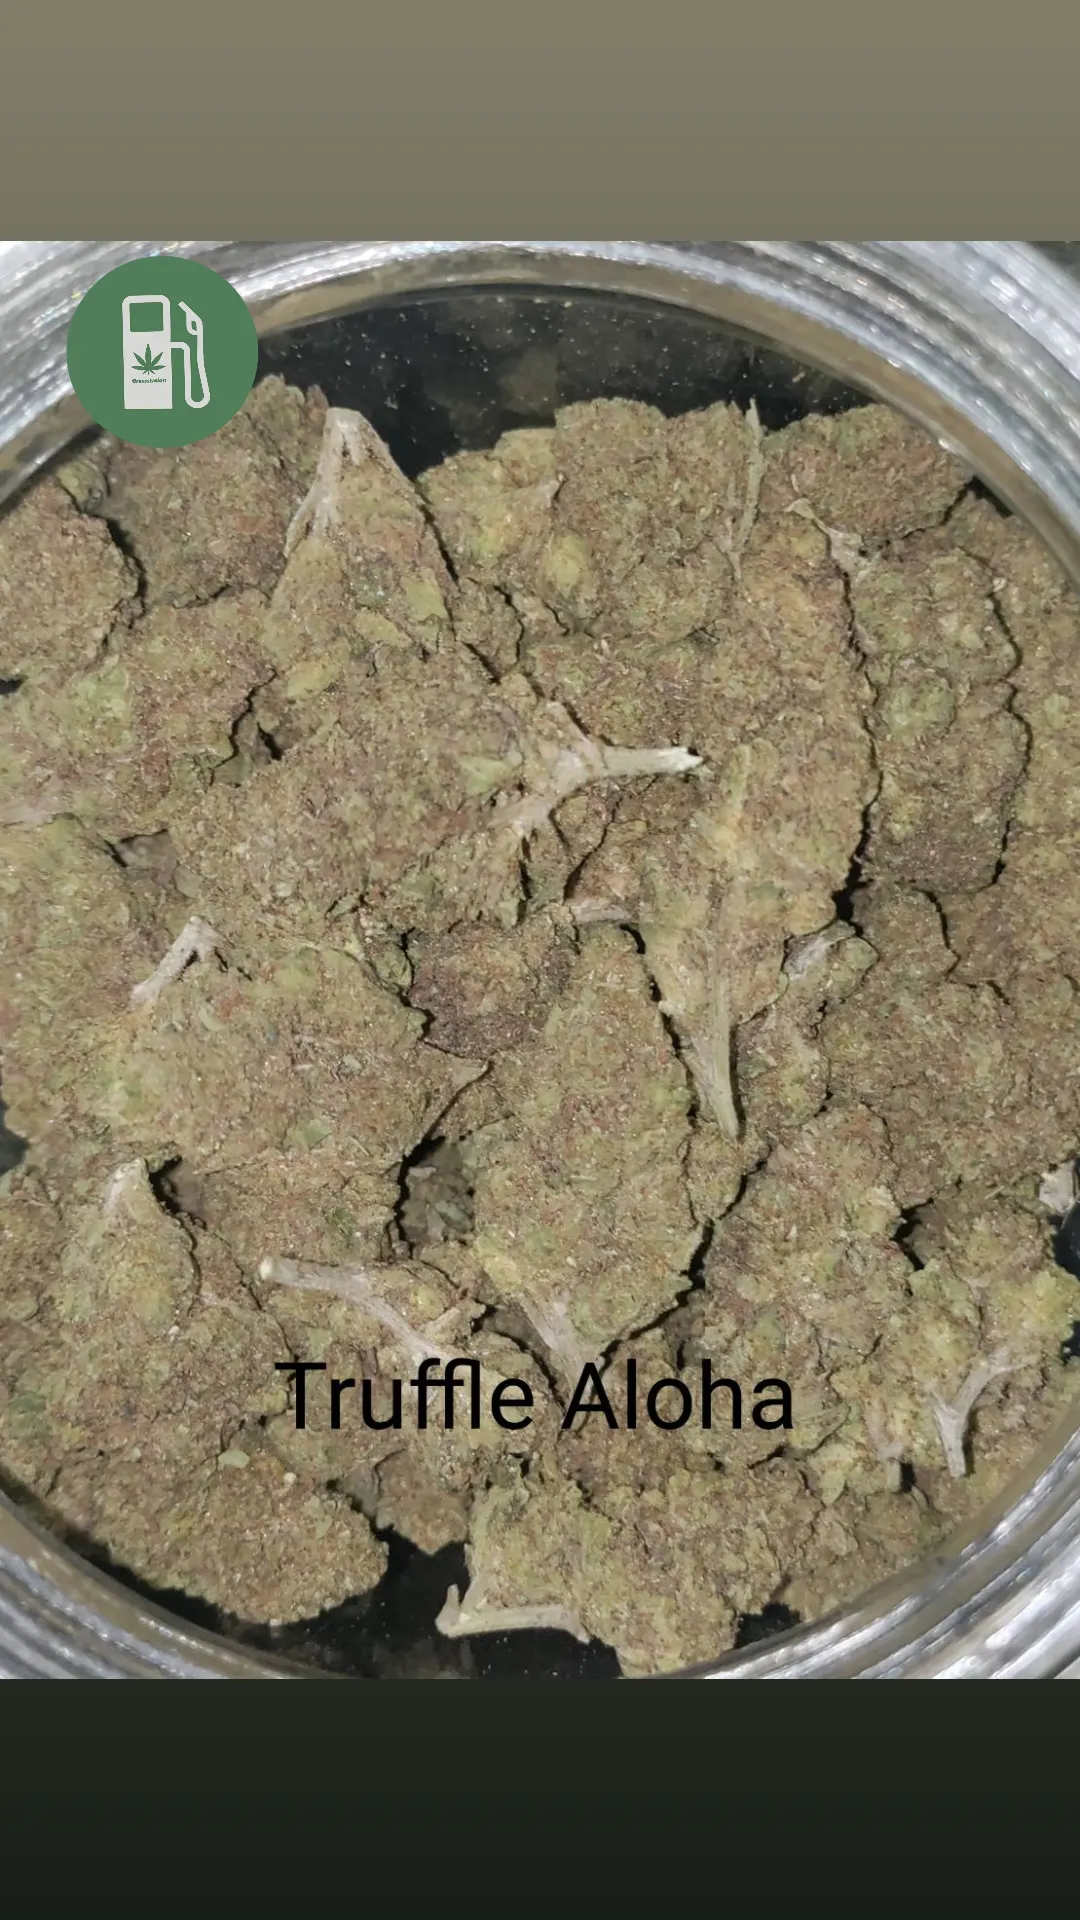 Product Image for Truffle Aloha